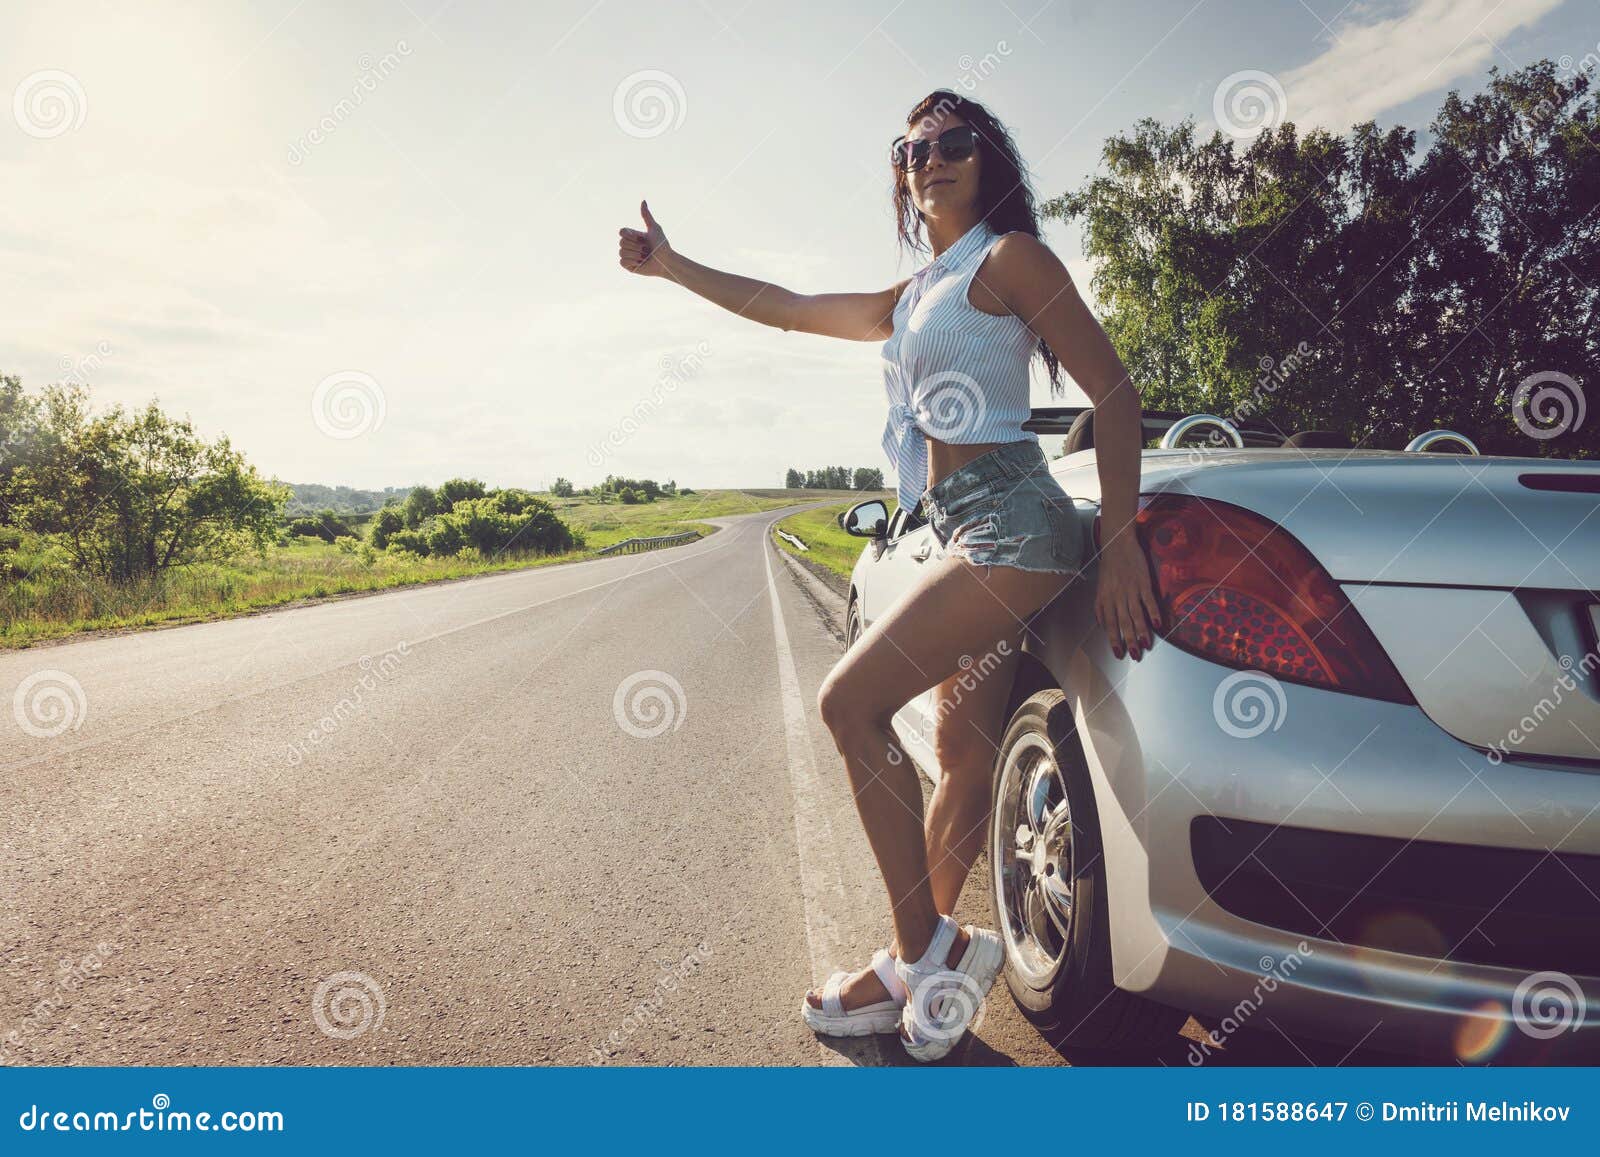 hot teen hitchhiker falls free pics hd